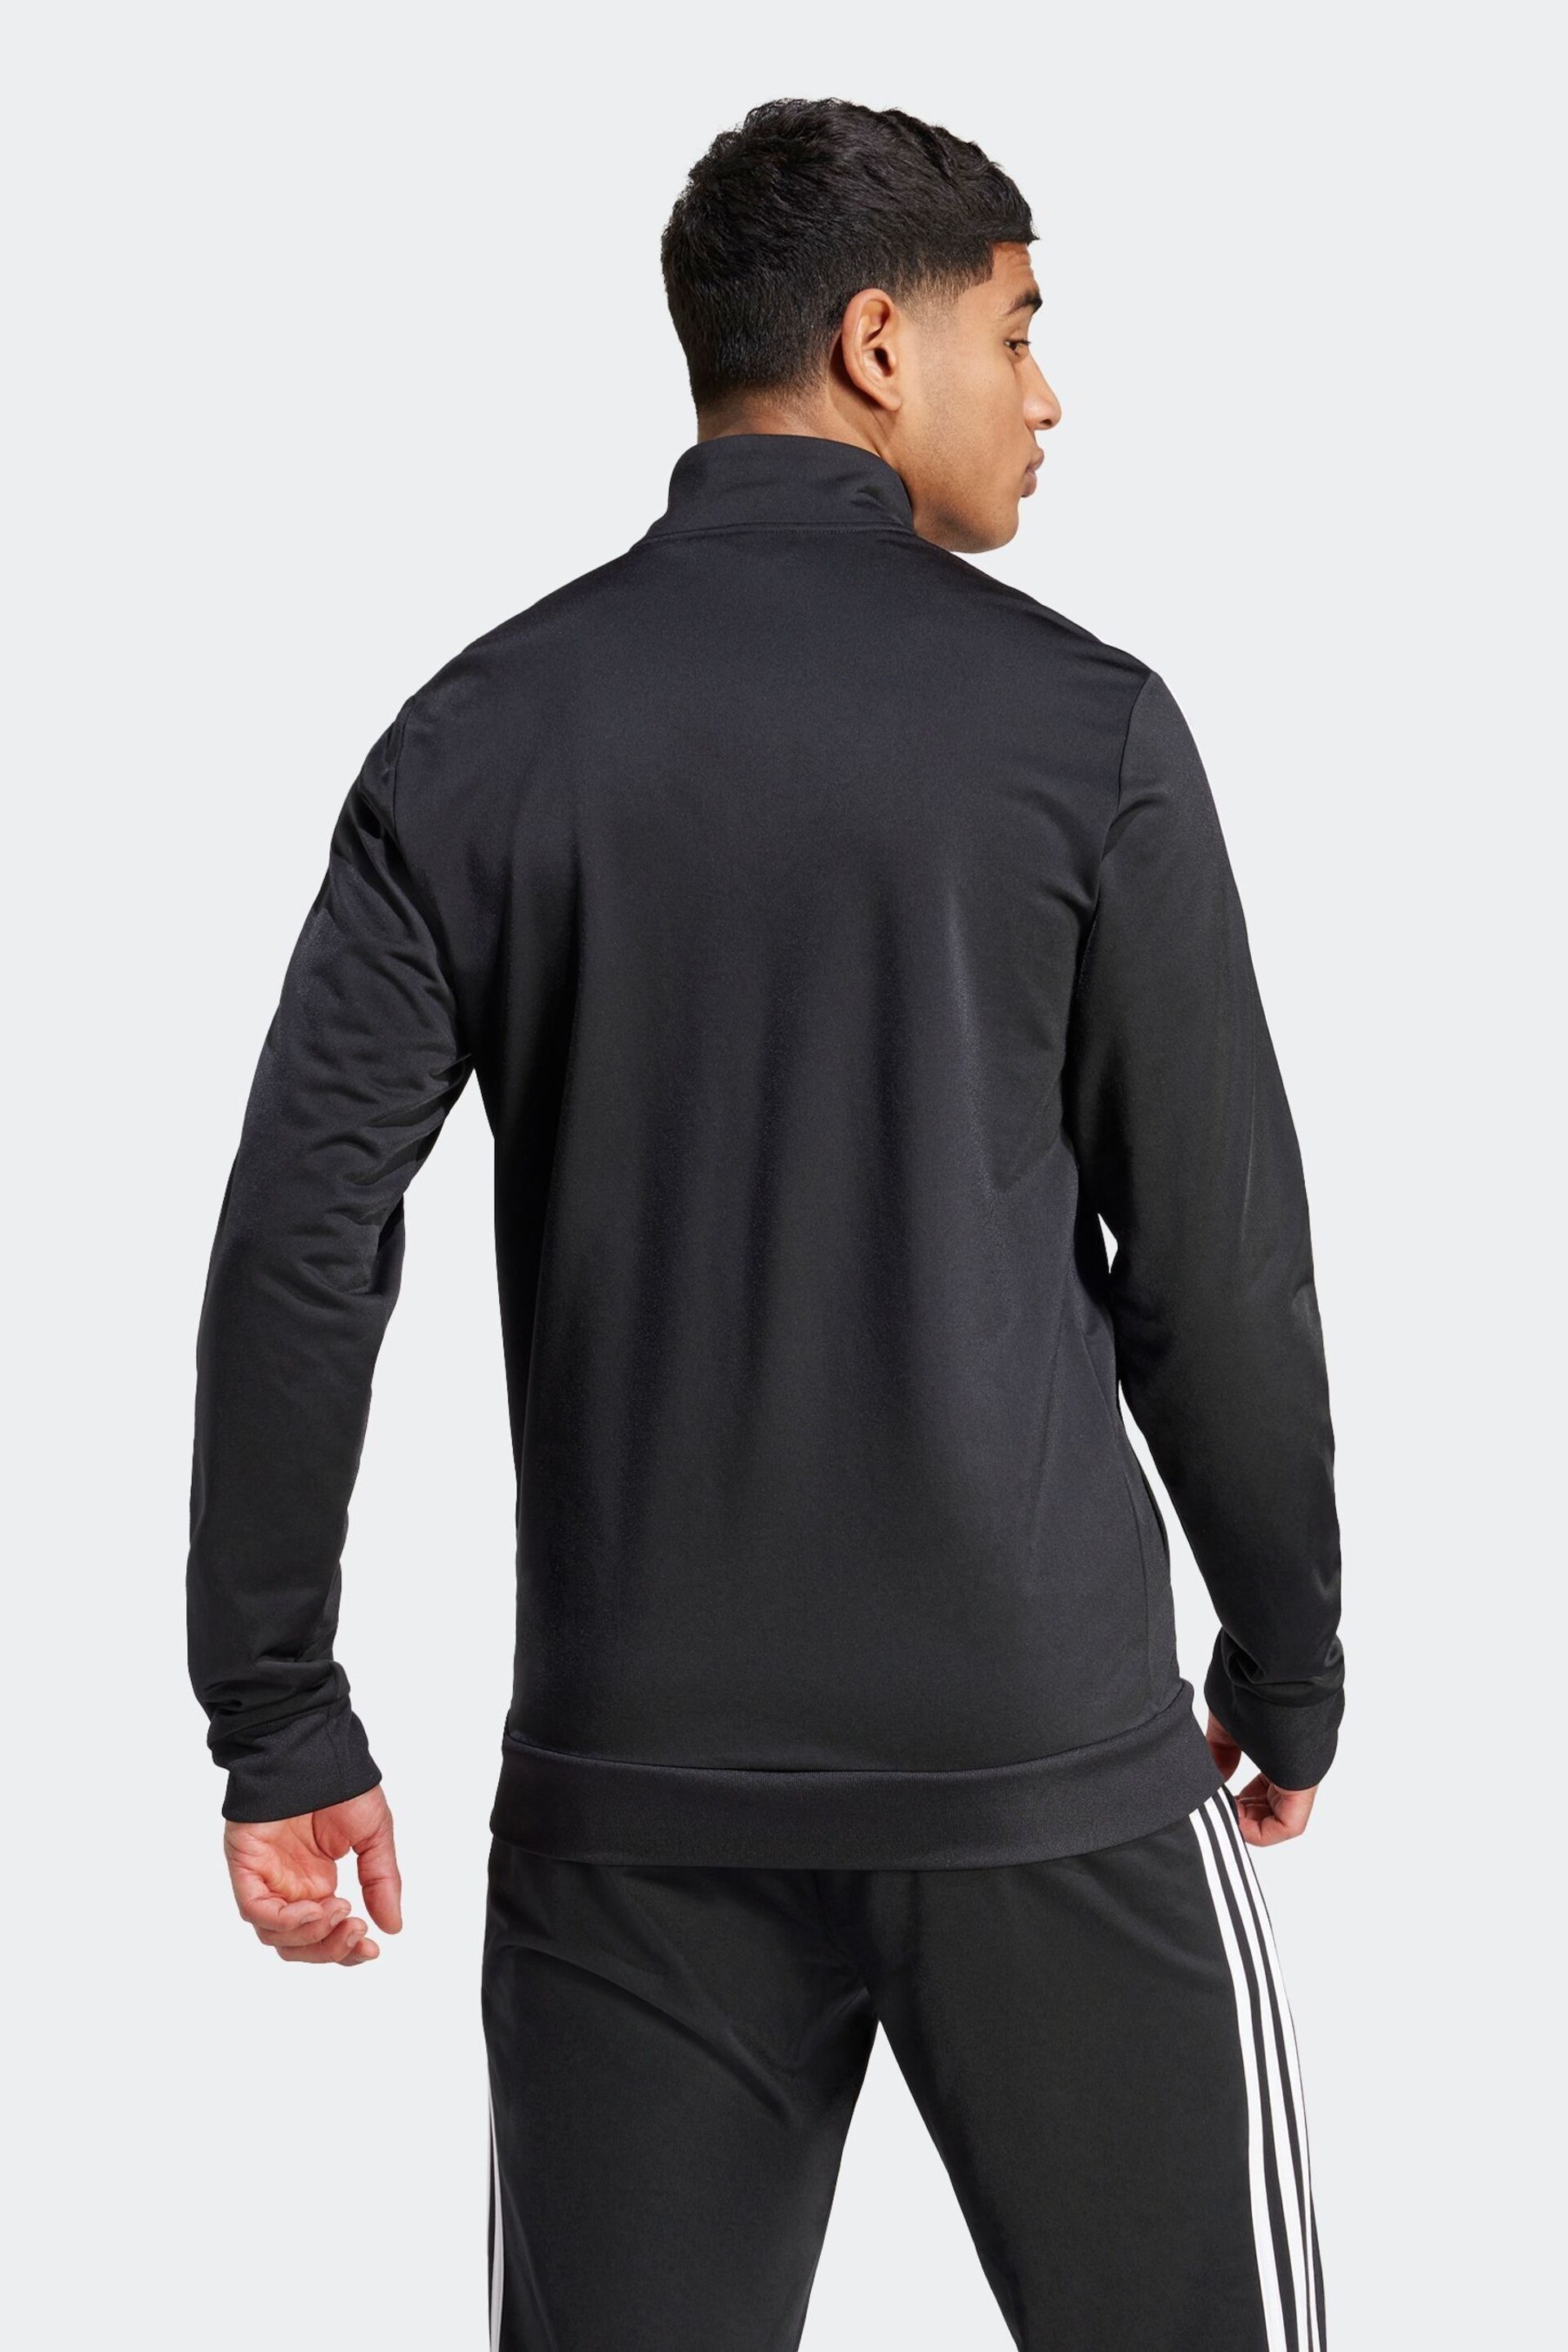 adidas Black Sportswear Essentials Warm-Up 3-Stripes Track Top - Image 2 of 6